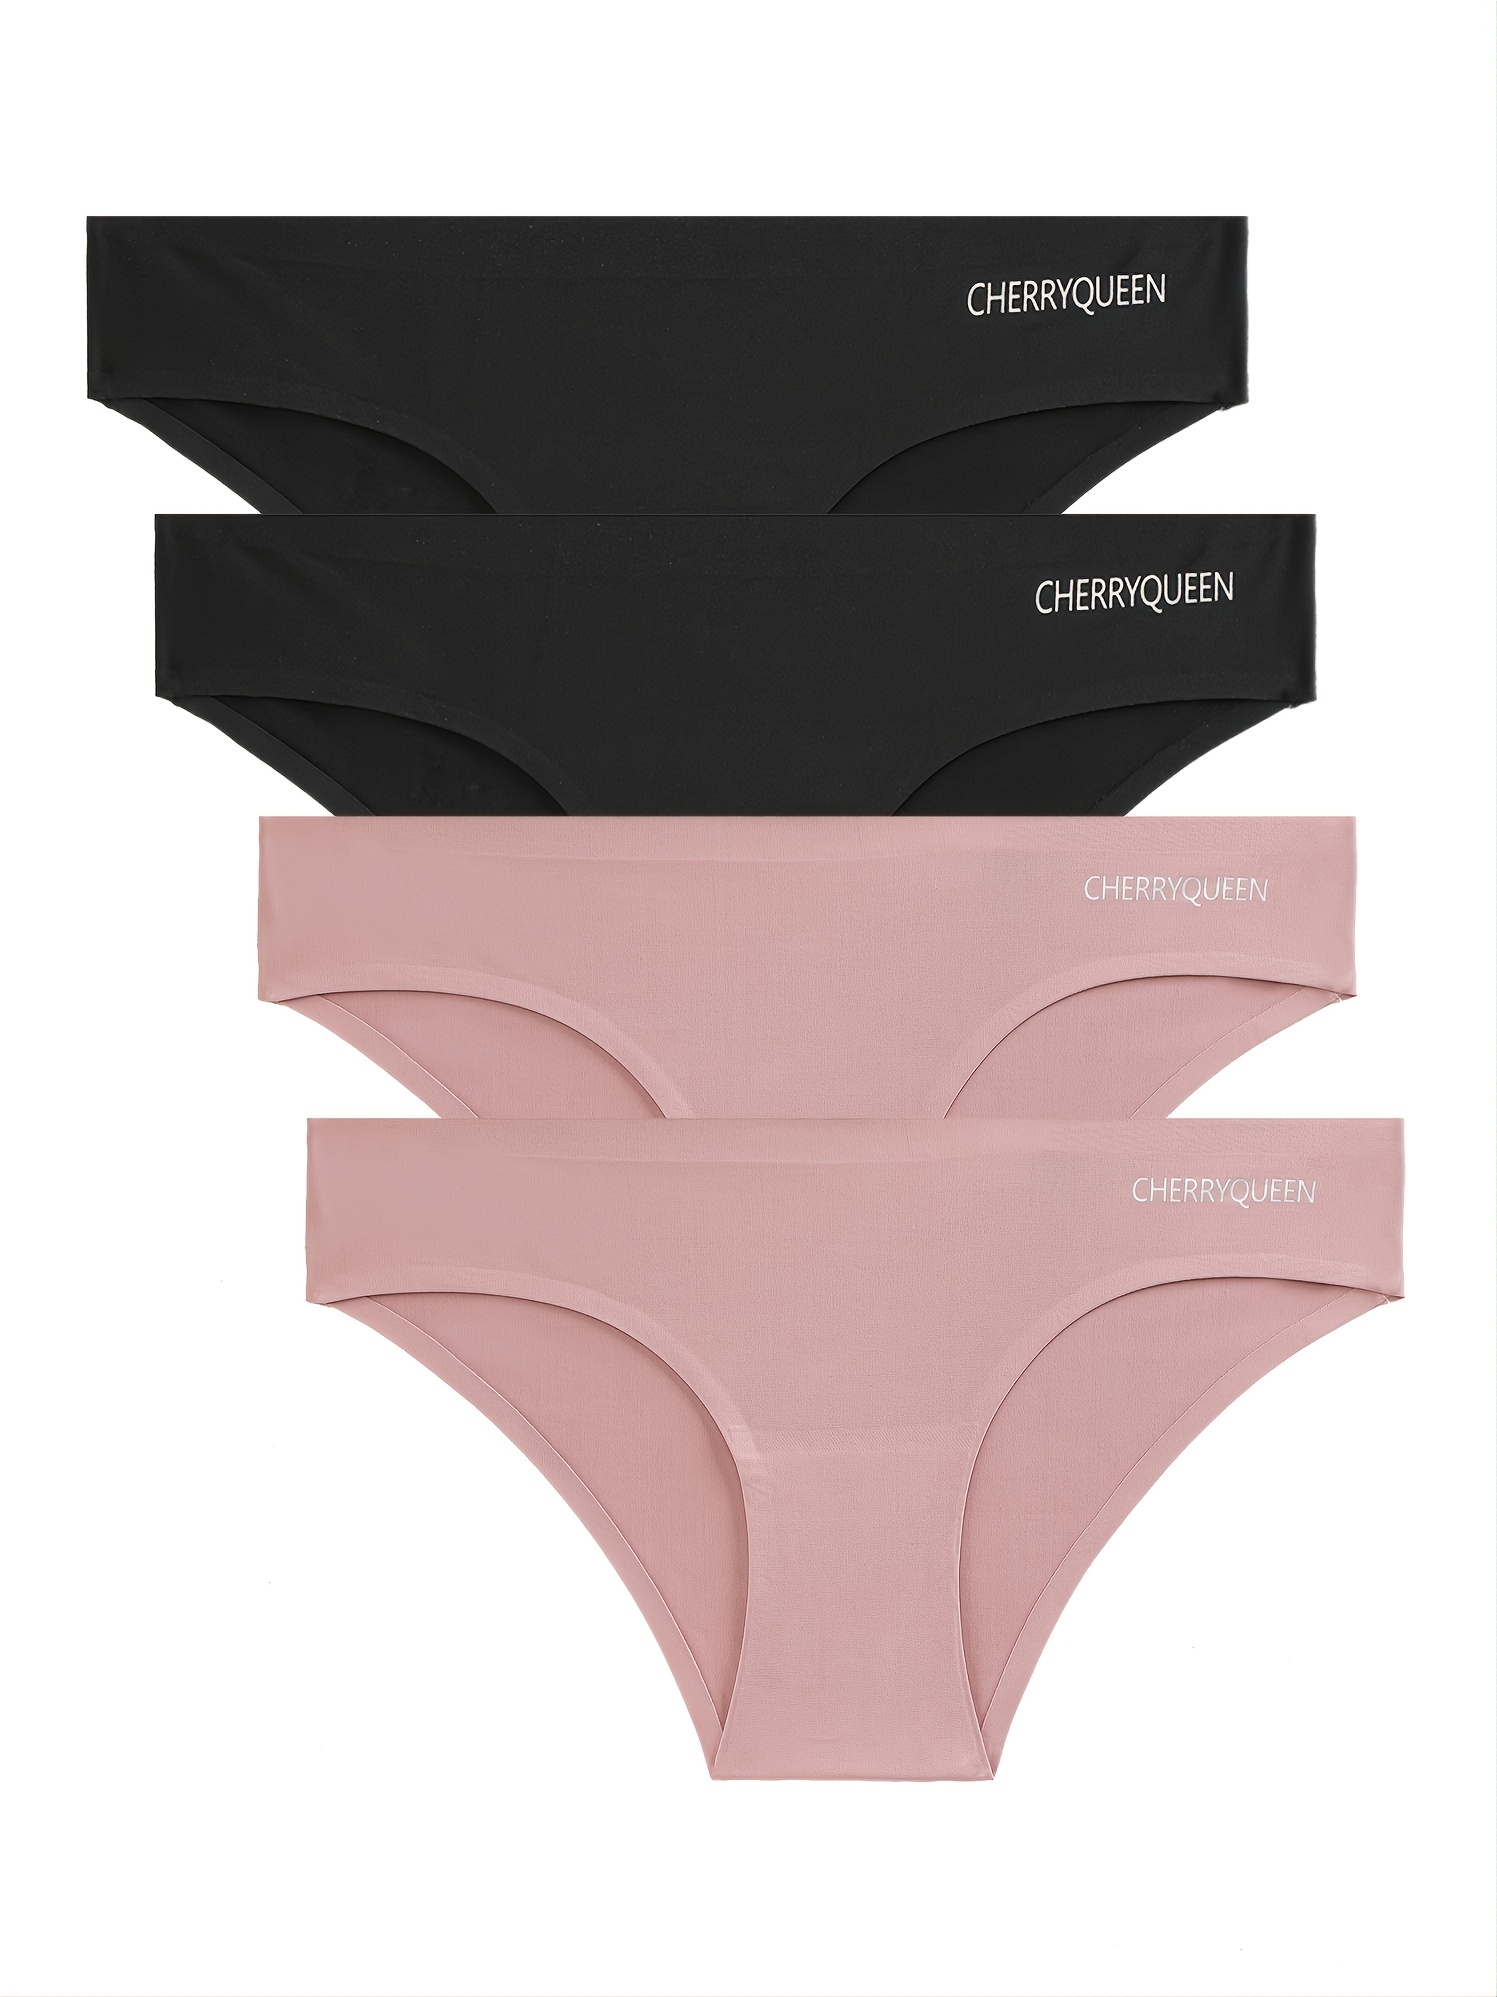 FEM GIRL Seamless Underwear Bikini Panties for Girls - 2 Pack or 4